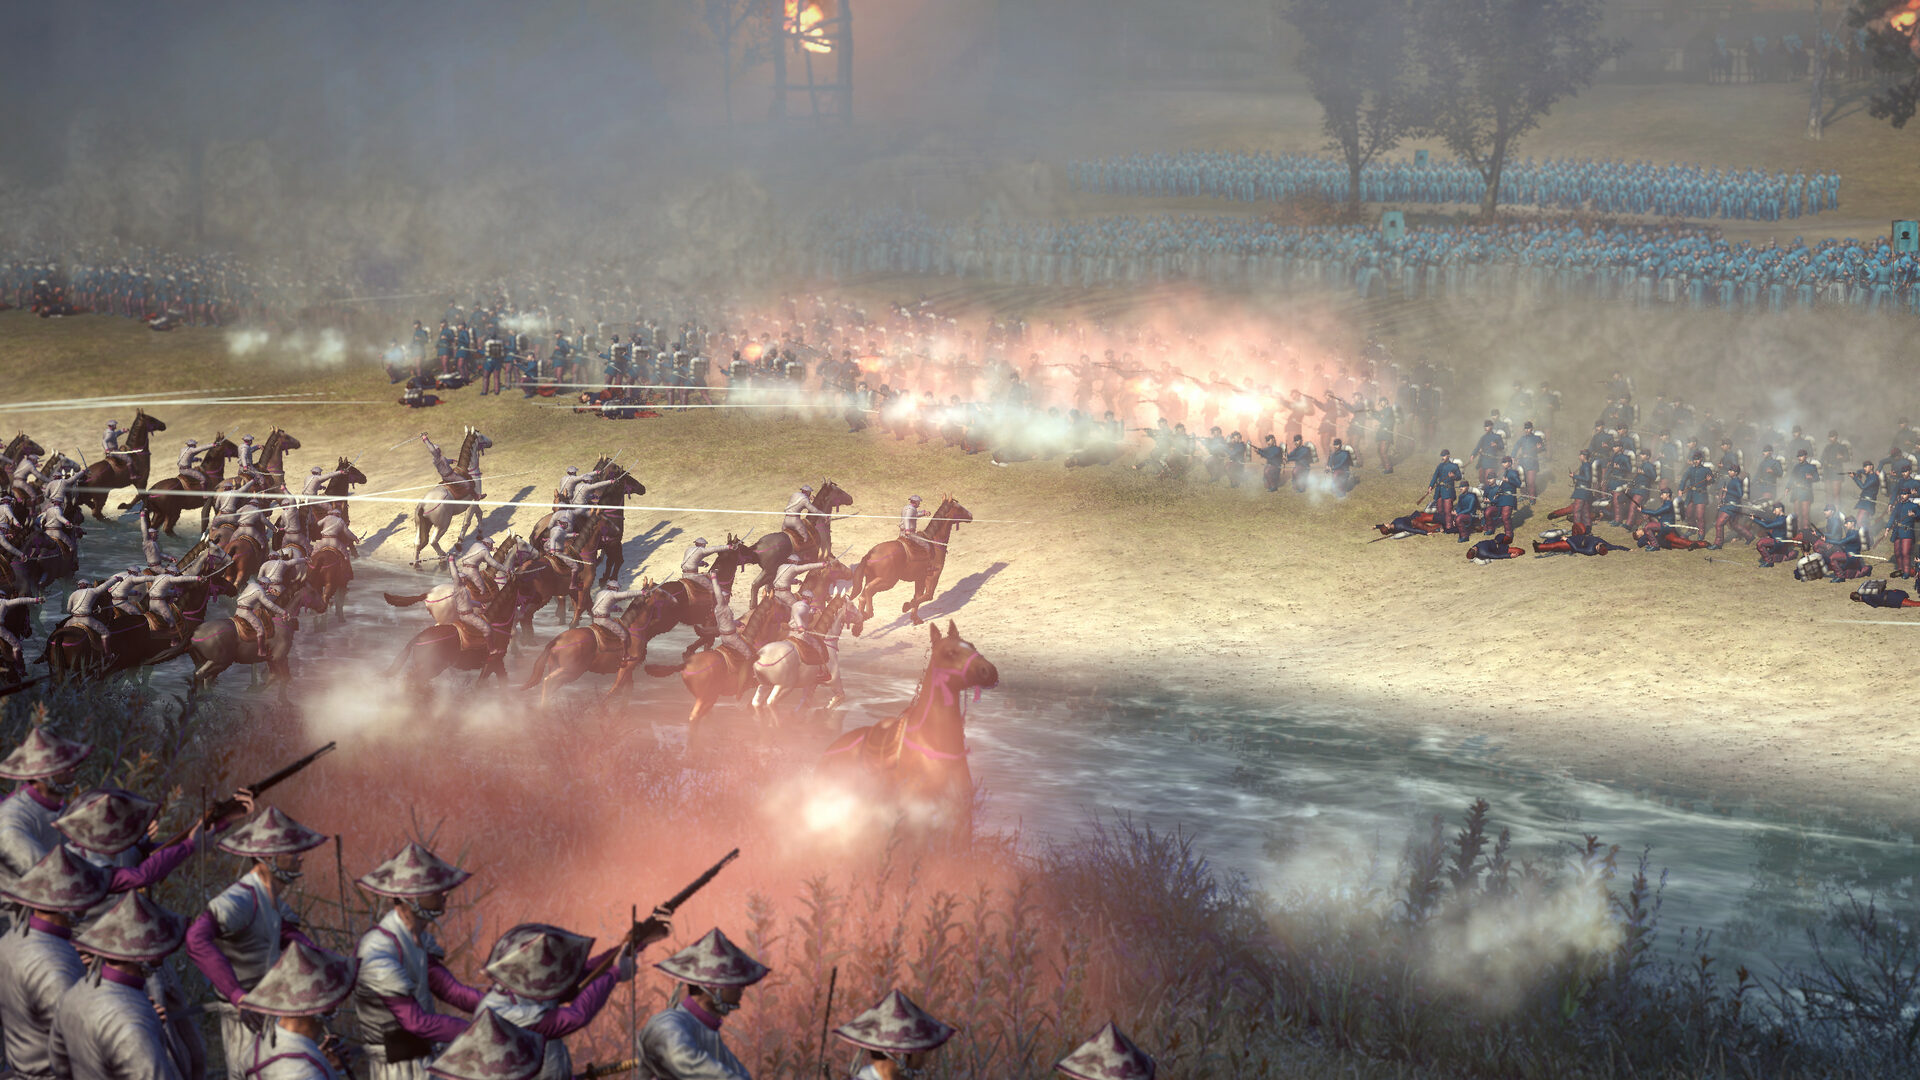 fall of the samurai gameplay